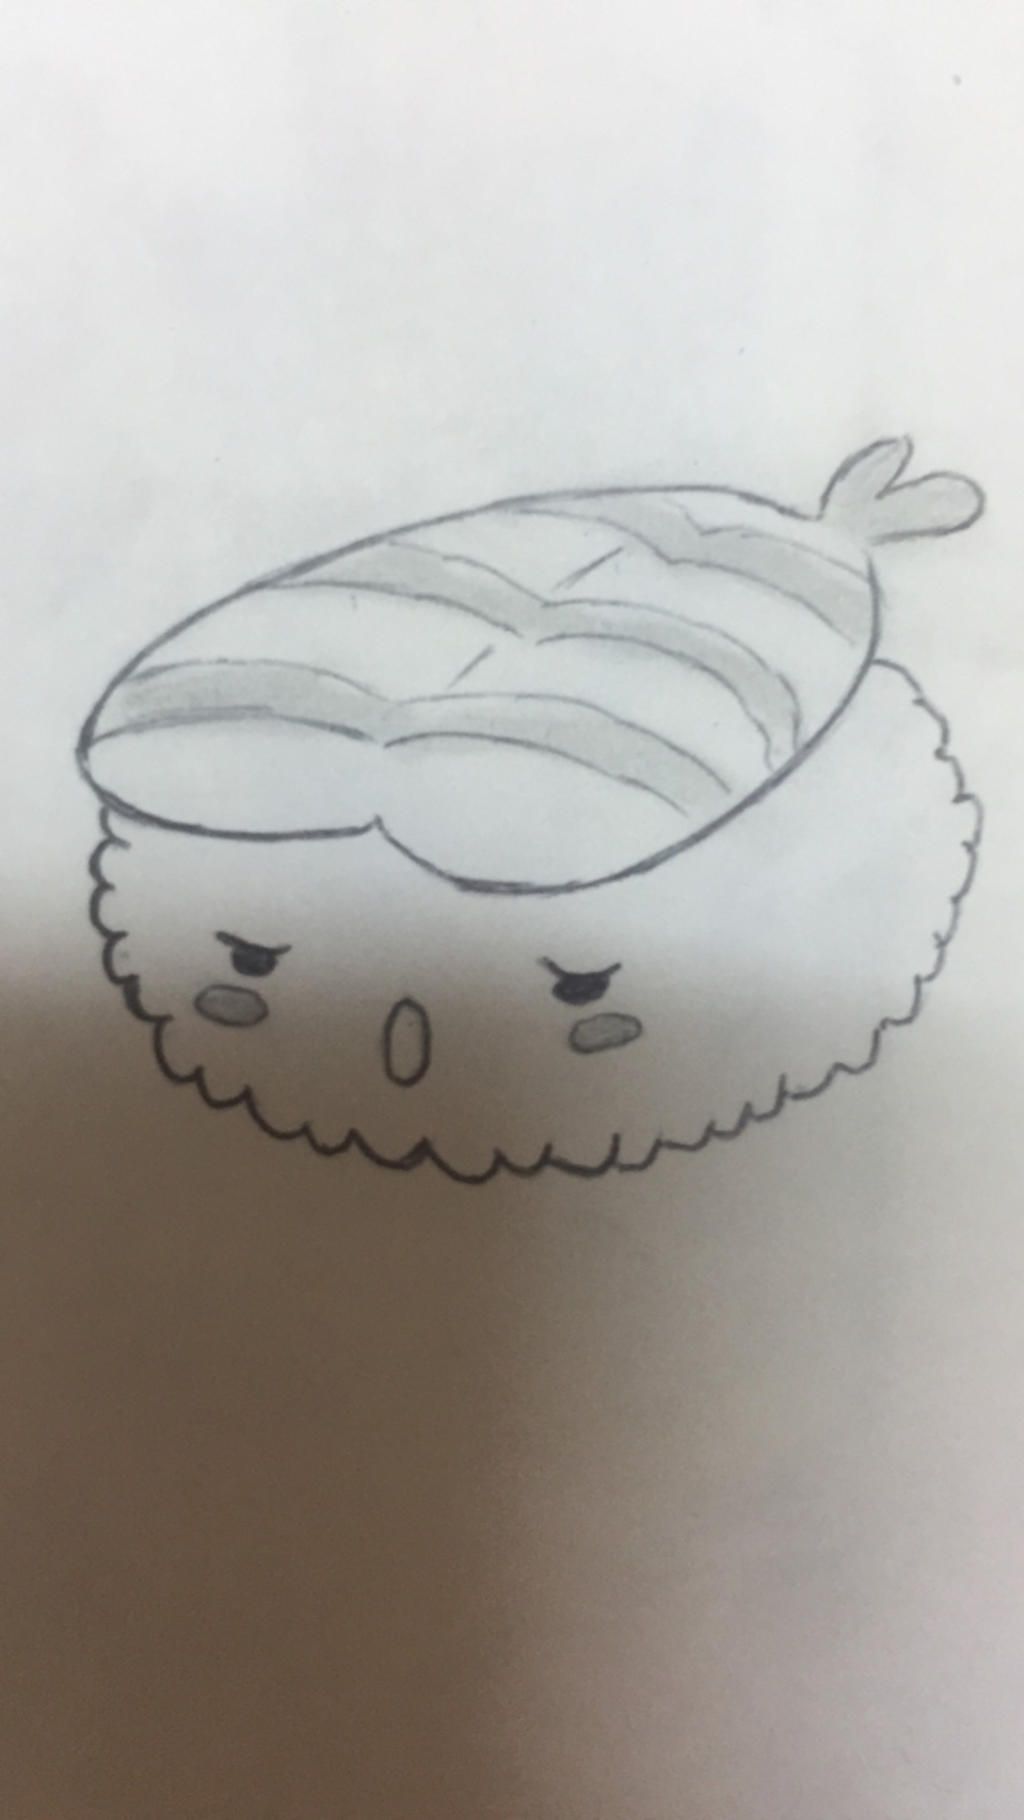 Sushi Vẽ Sticker đồ ăn Cute  UMA